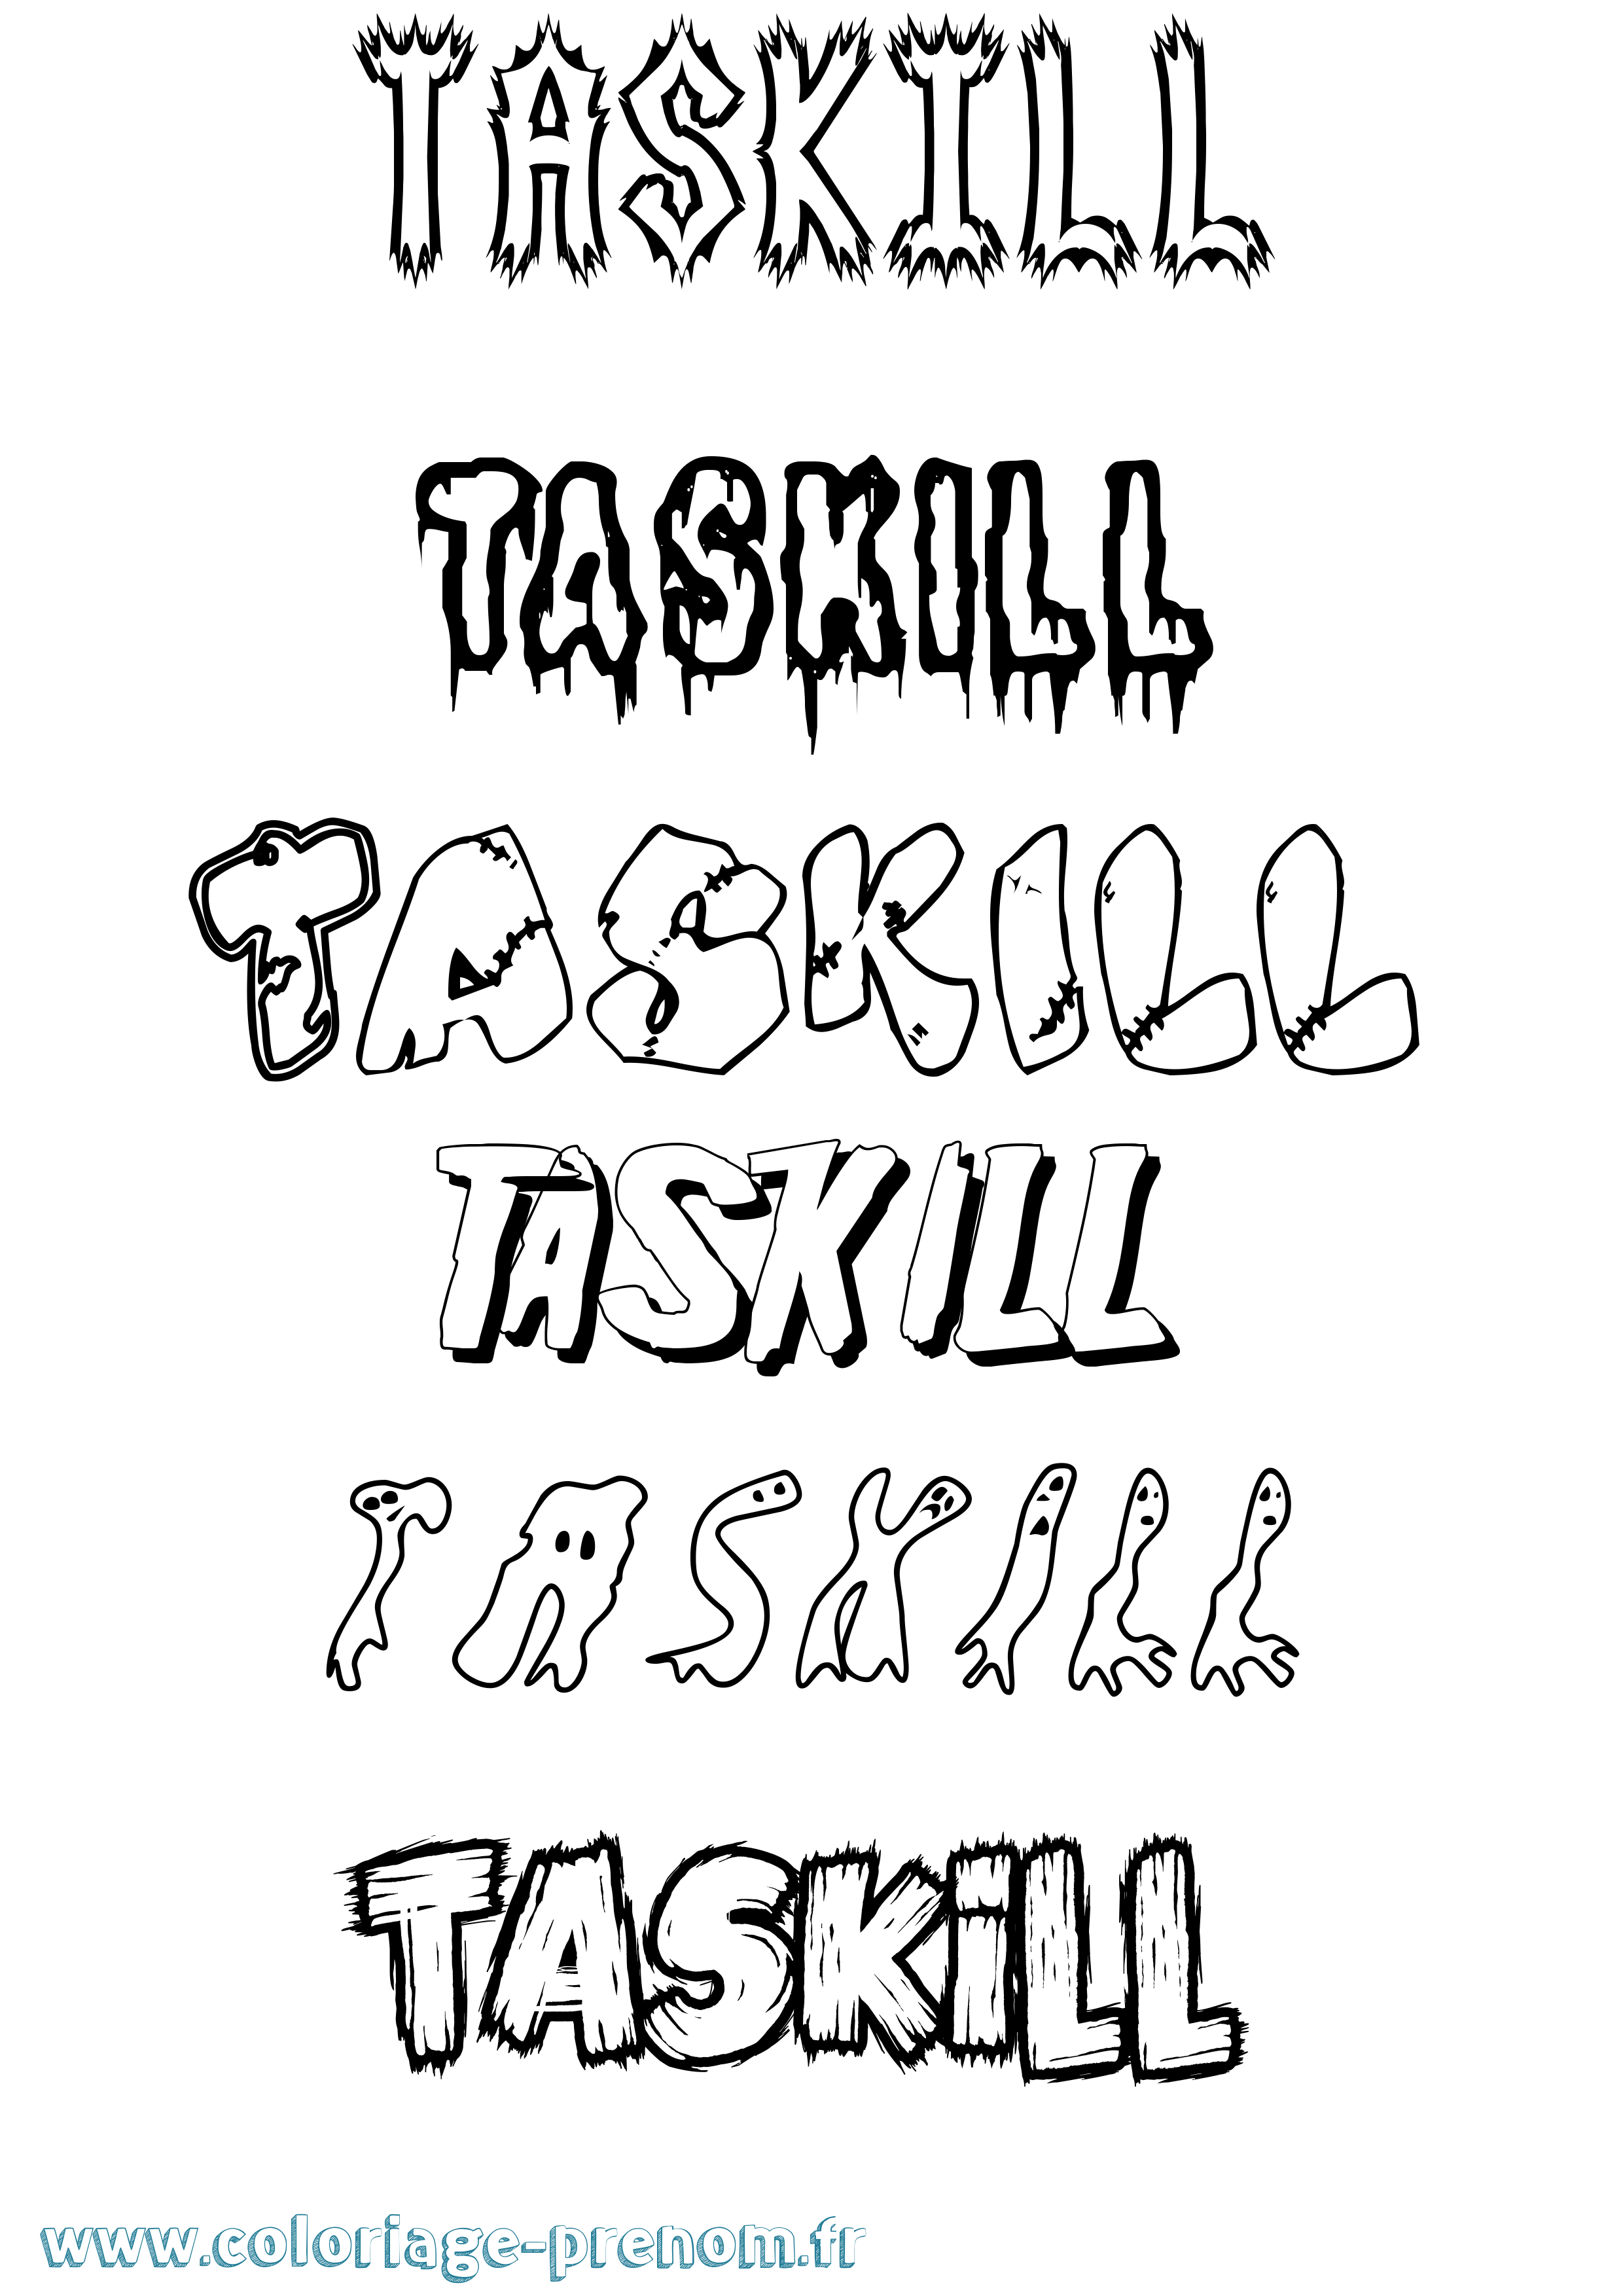 Coloriage prénom Taskill Frisson